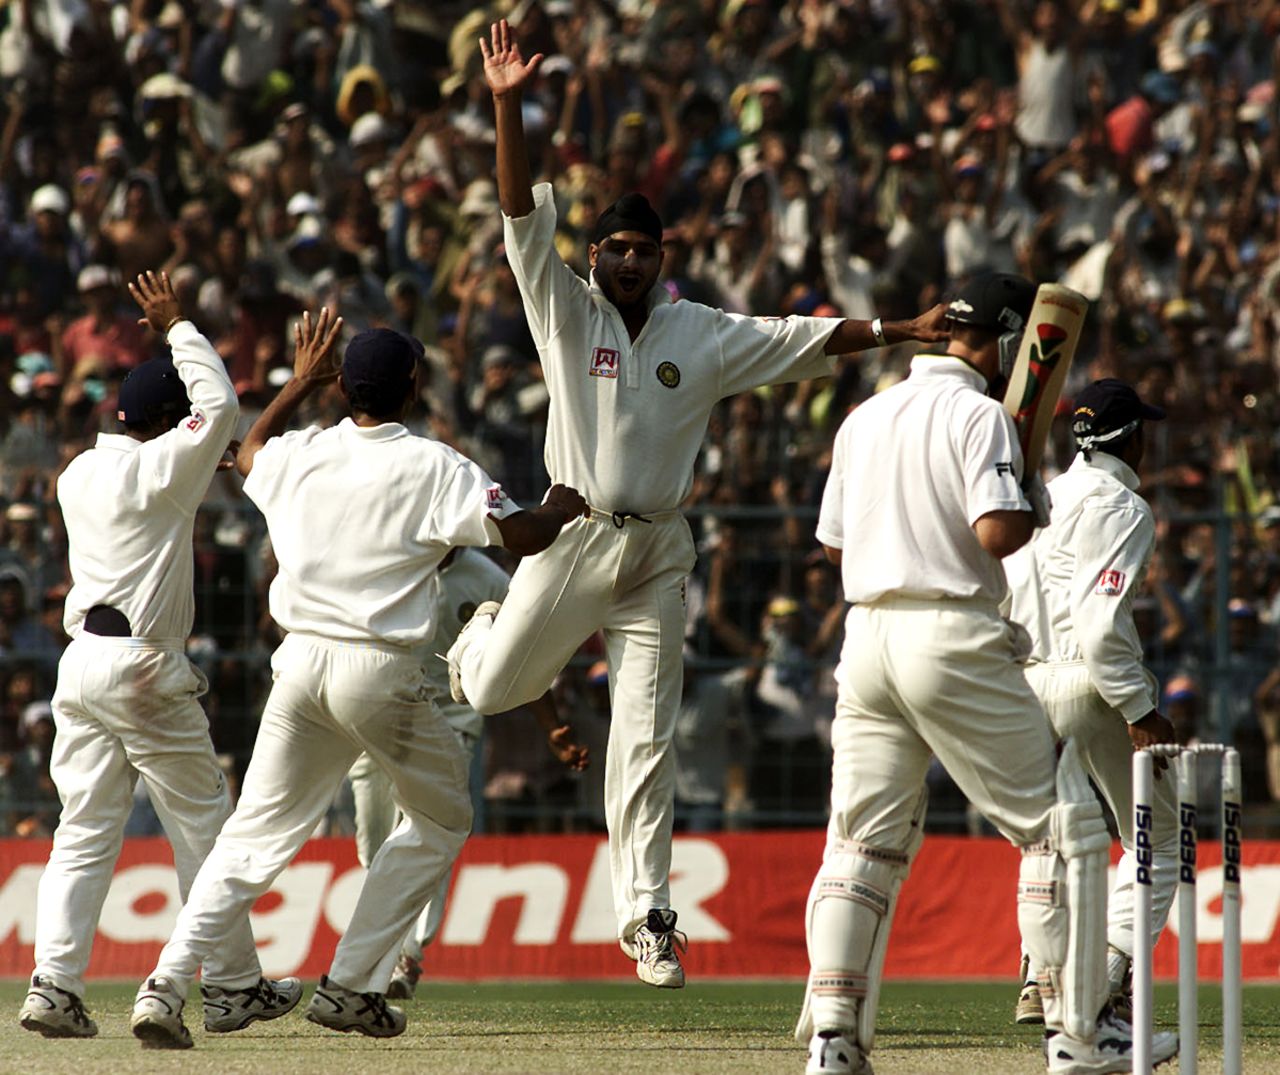 Harbhajan Singh claims the wicket of Ricky Ponting, India v Australia, 2nd Test, Kolkata, 5th day, March 15, 2001